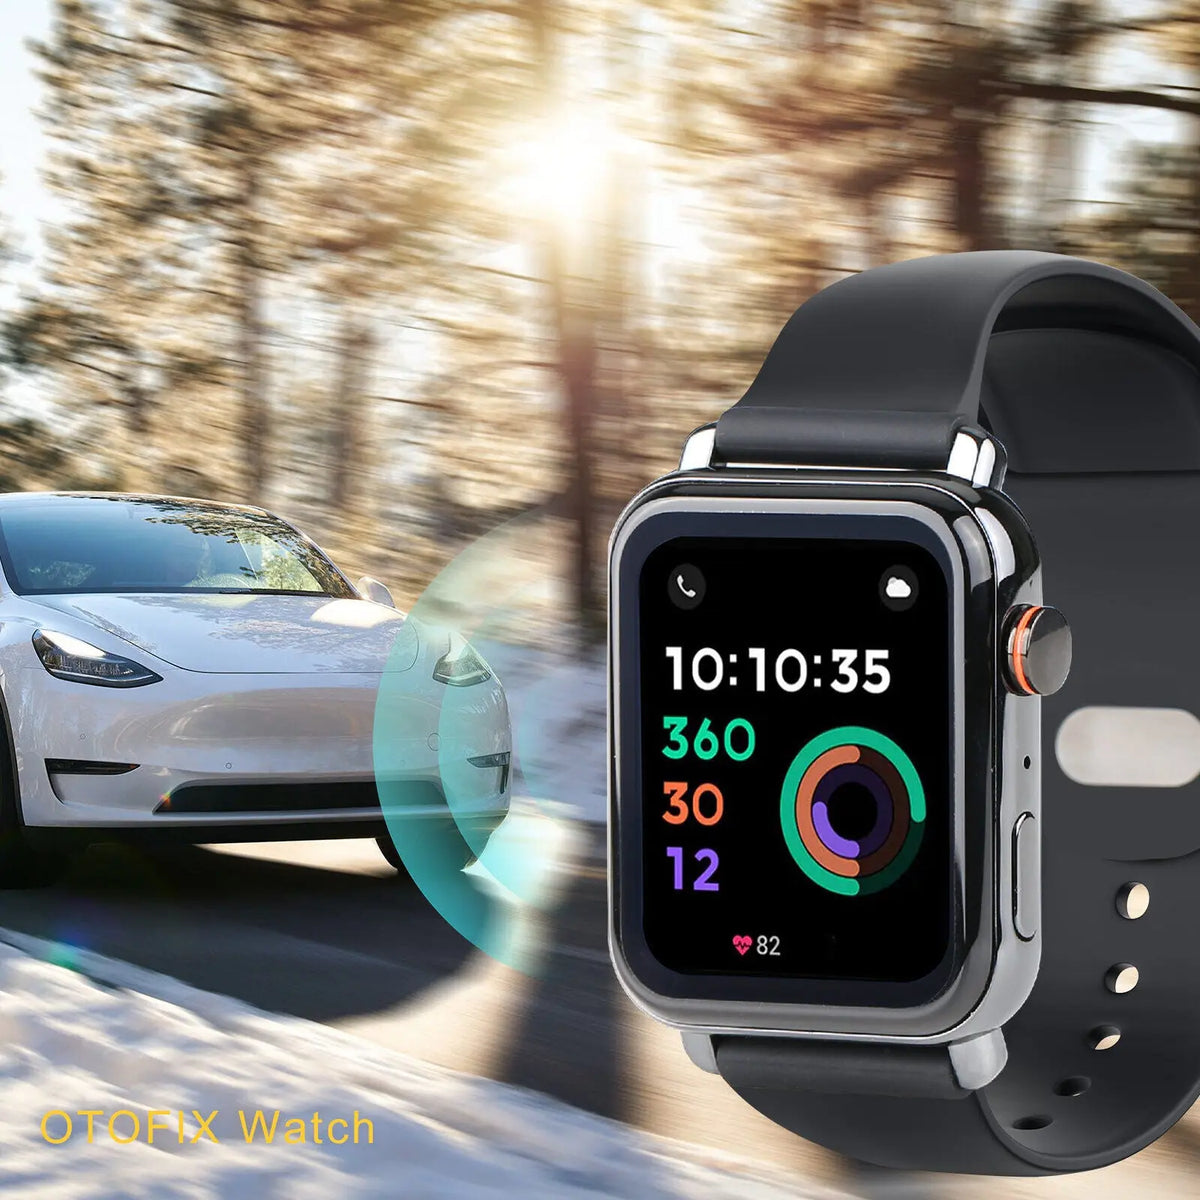 OTOFIX Watch Voice Control Smart Remotekey Lock/Unlock Door Vehicle Tools Smart Watch Key for Car - FairTools